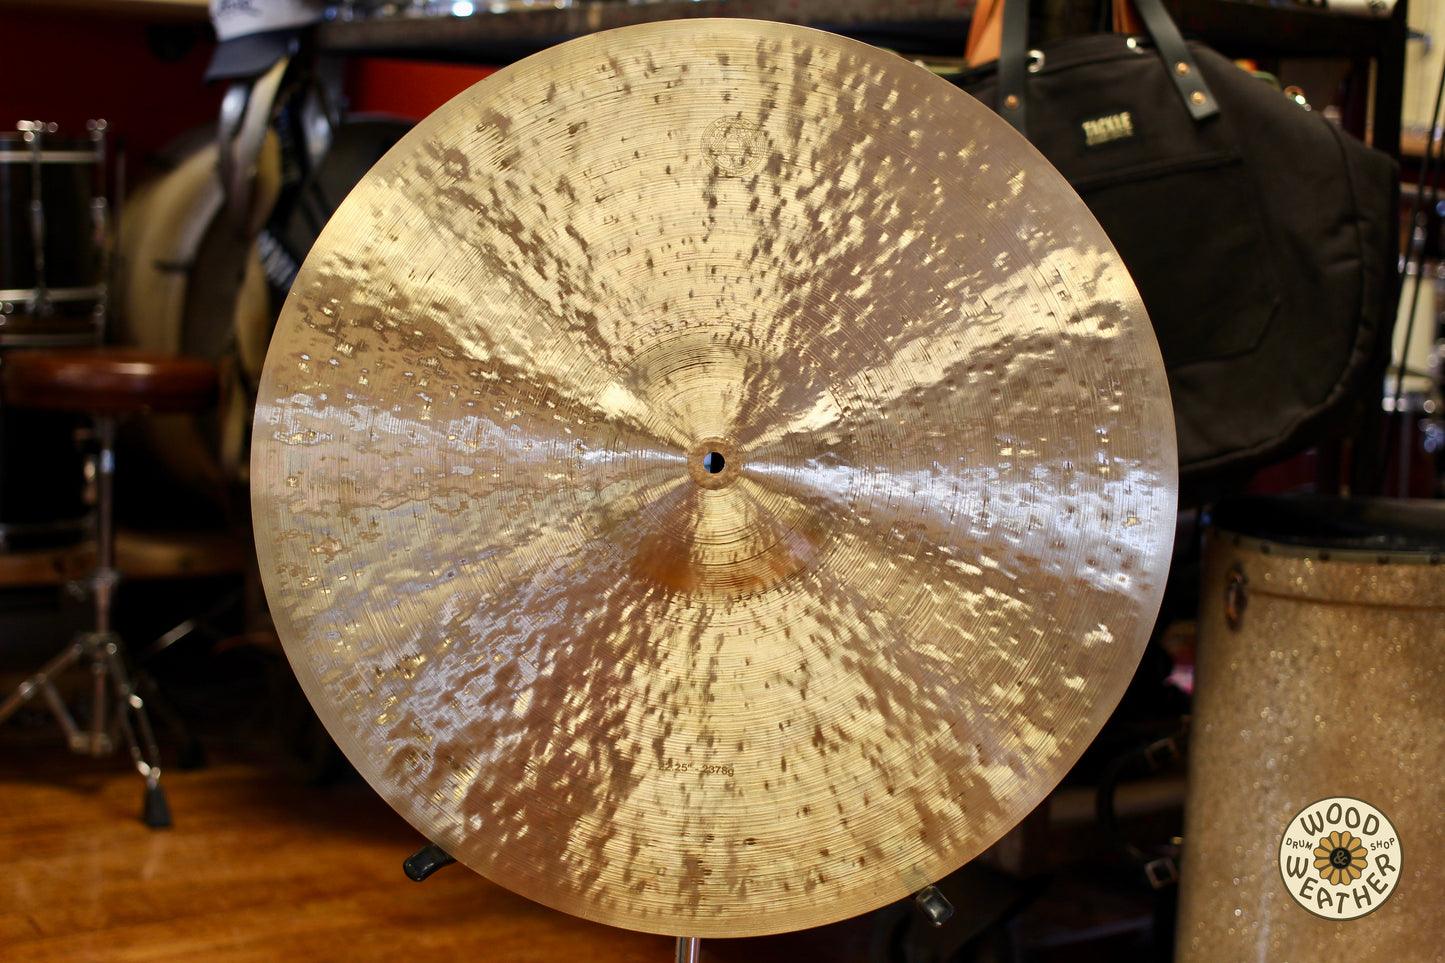 Borba Cymbals 22" Ride Cymbal 2378g